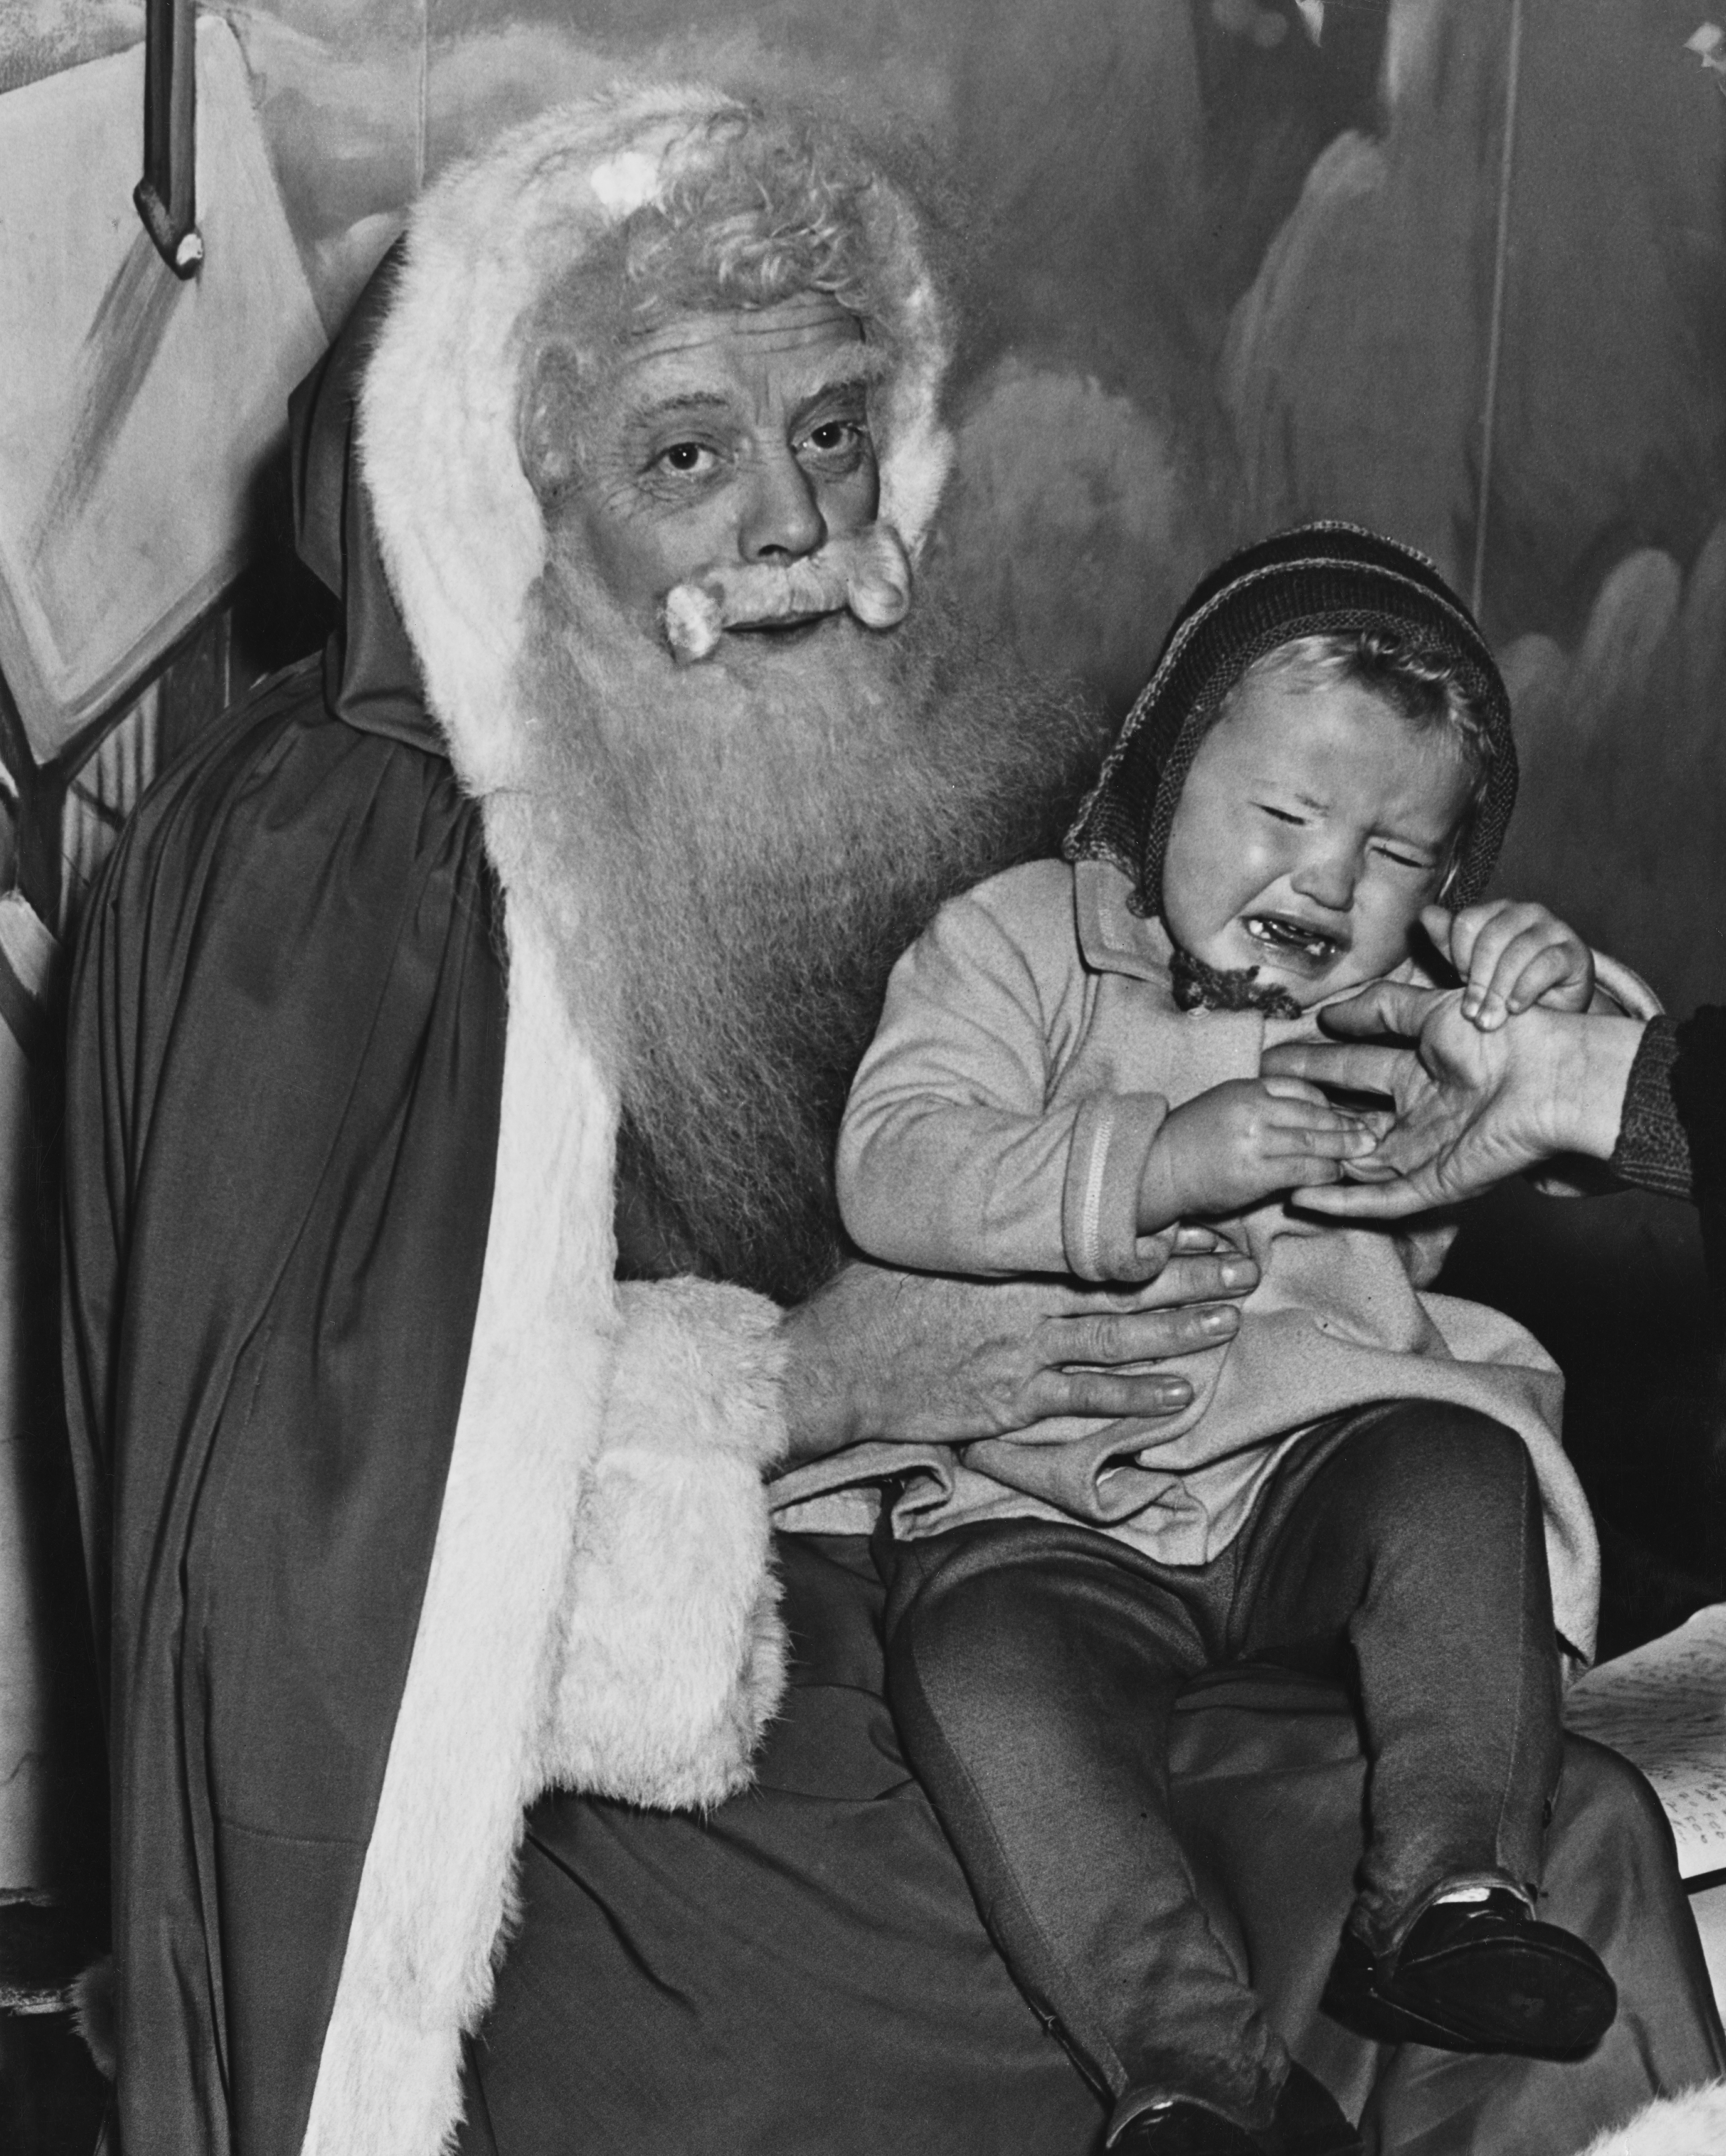 A baby who does not like Santa. 